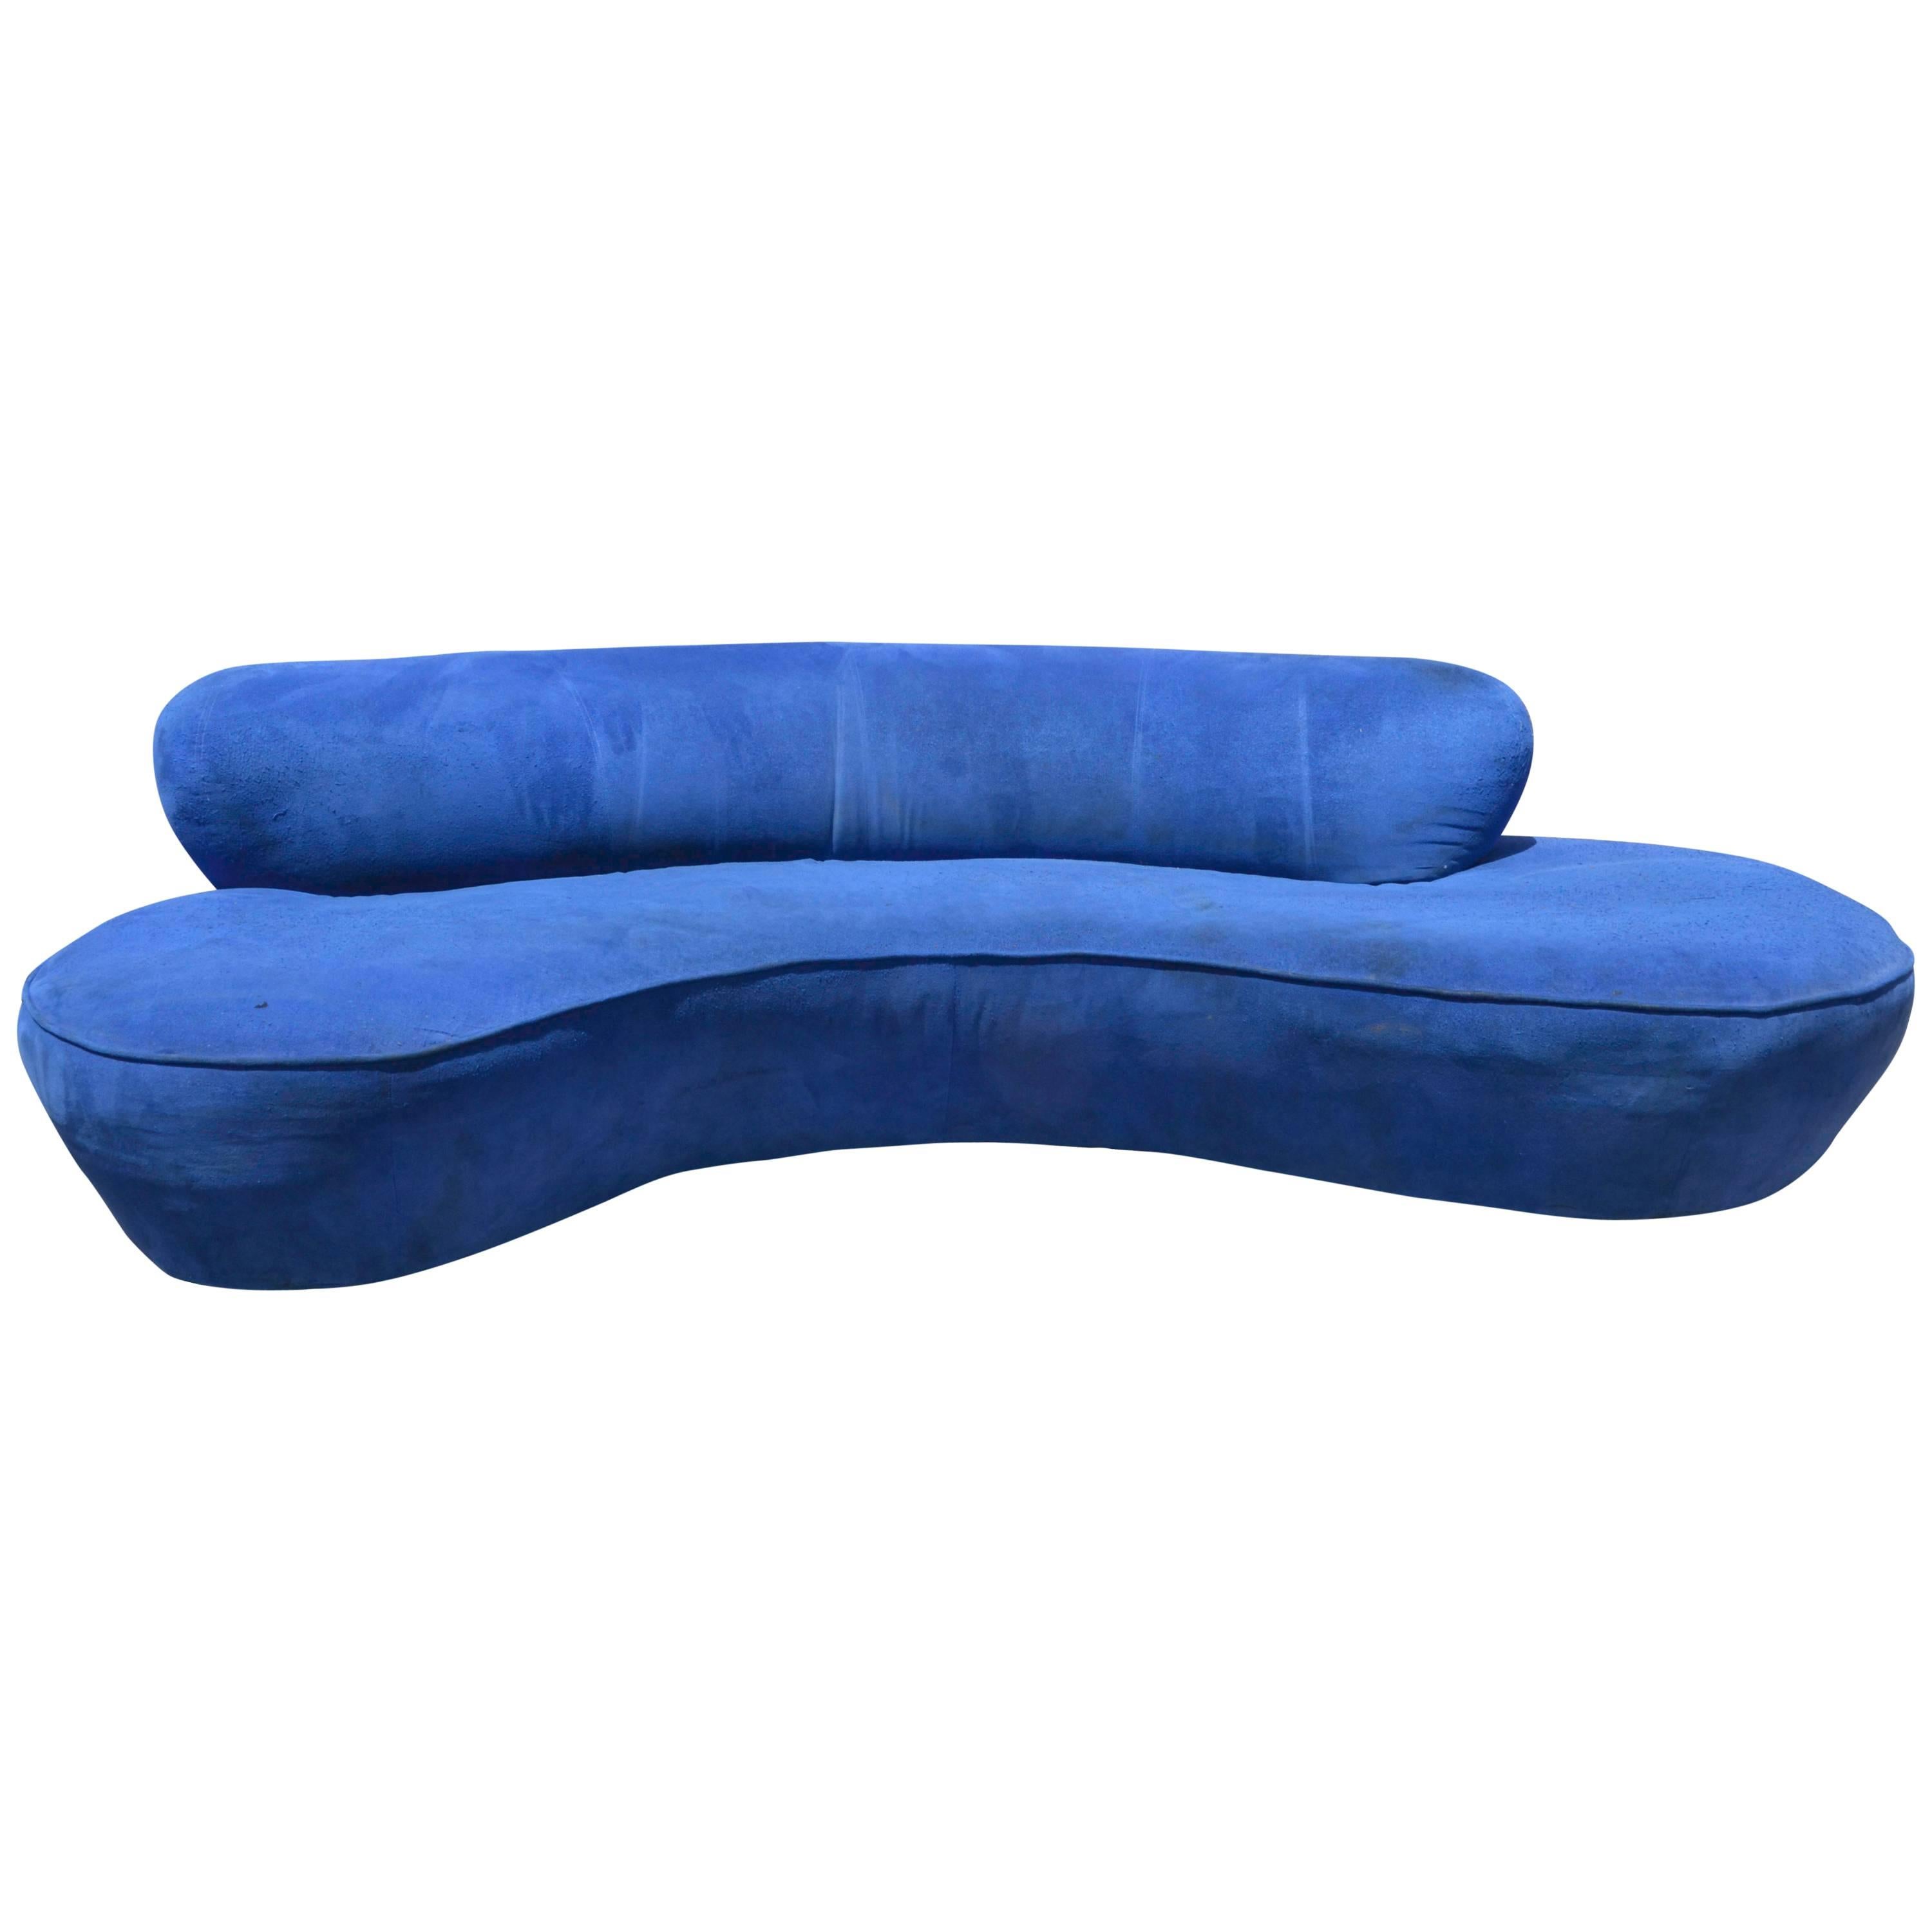 Vladimir Kagan Cloud Sofa in Blue Microfiber by Directional Furniture